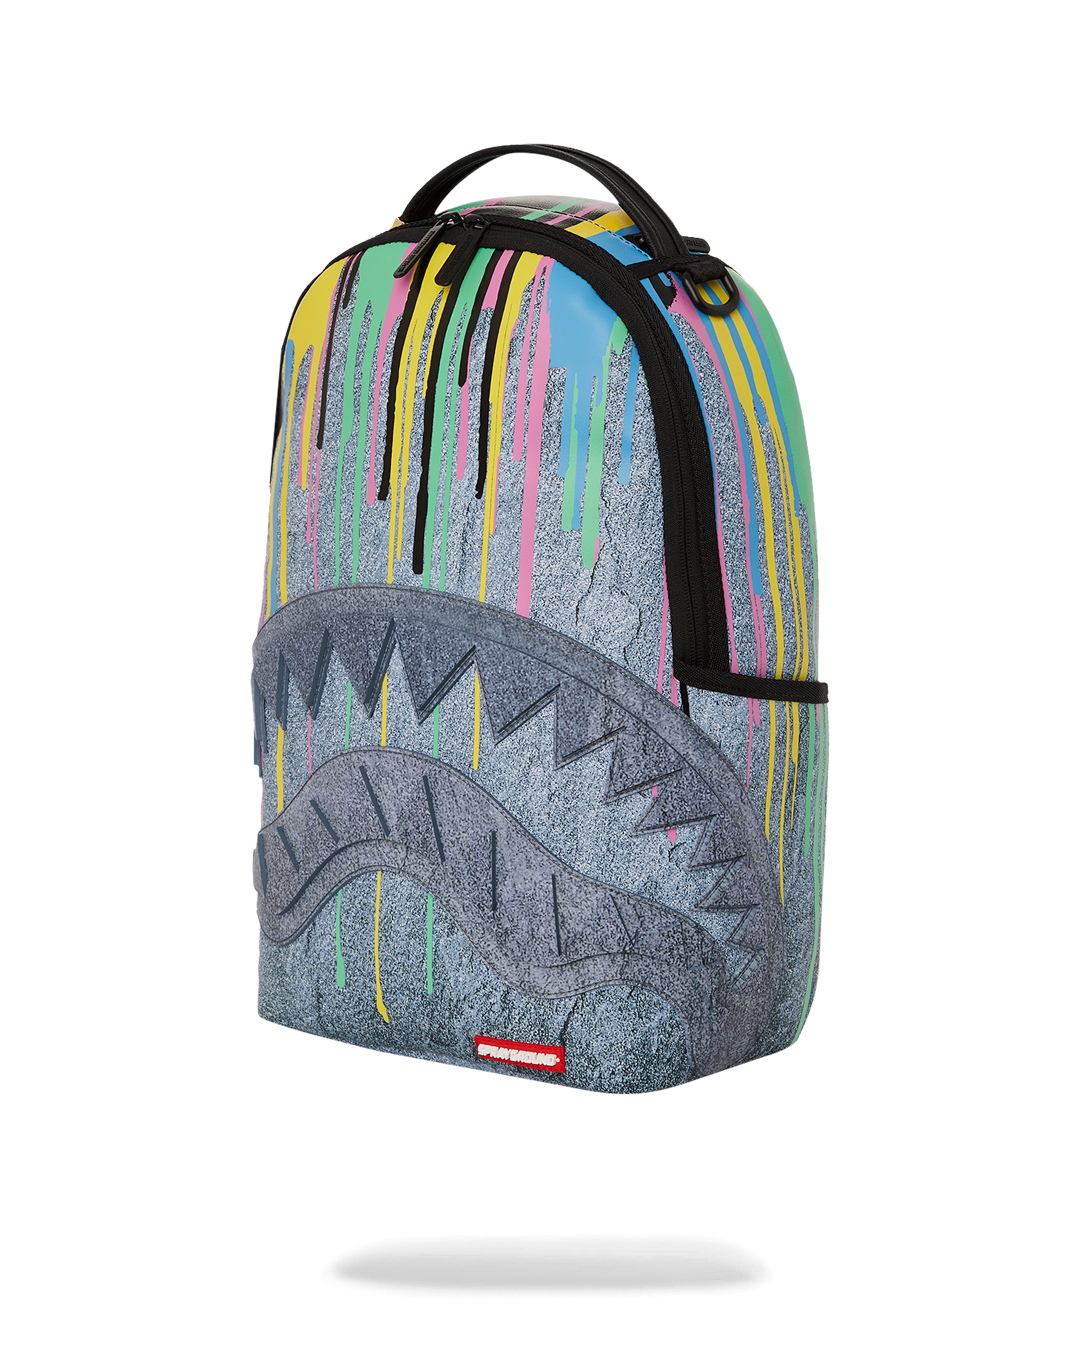 Sprayground Shark backpack  Shark backpack, Sprayground, Stylish